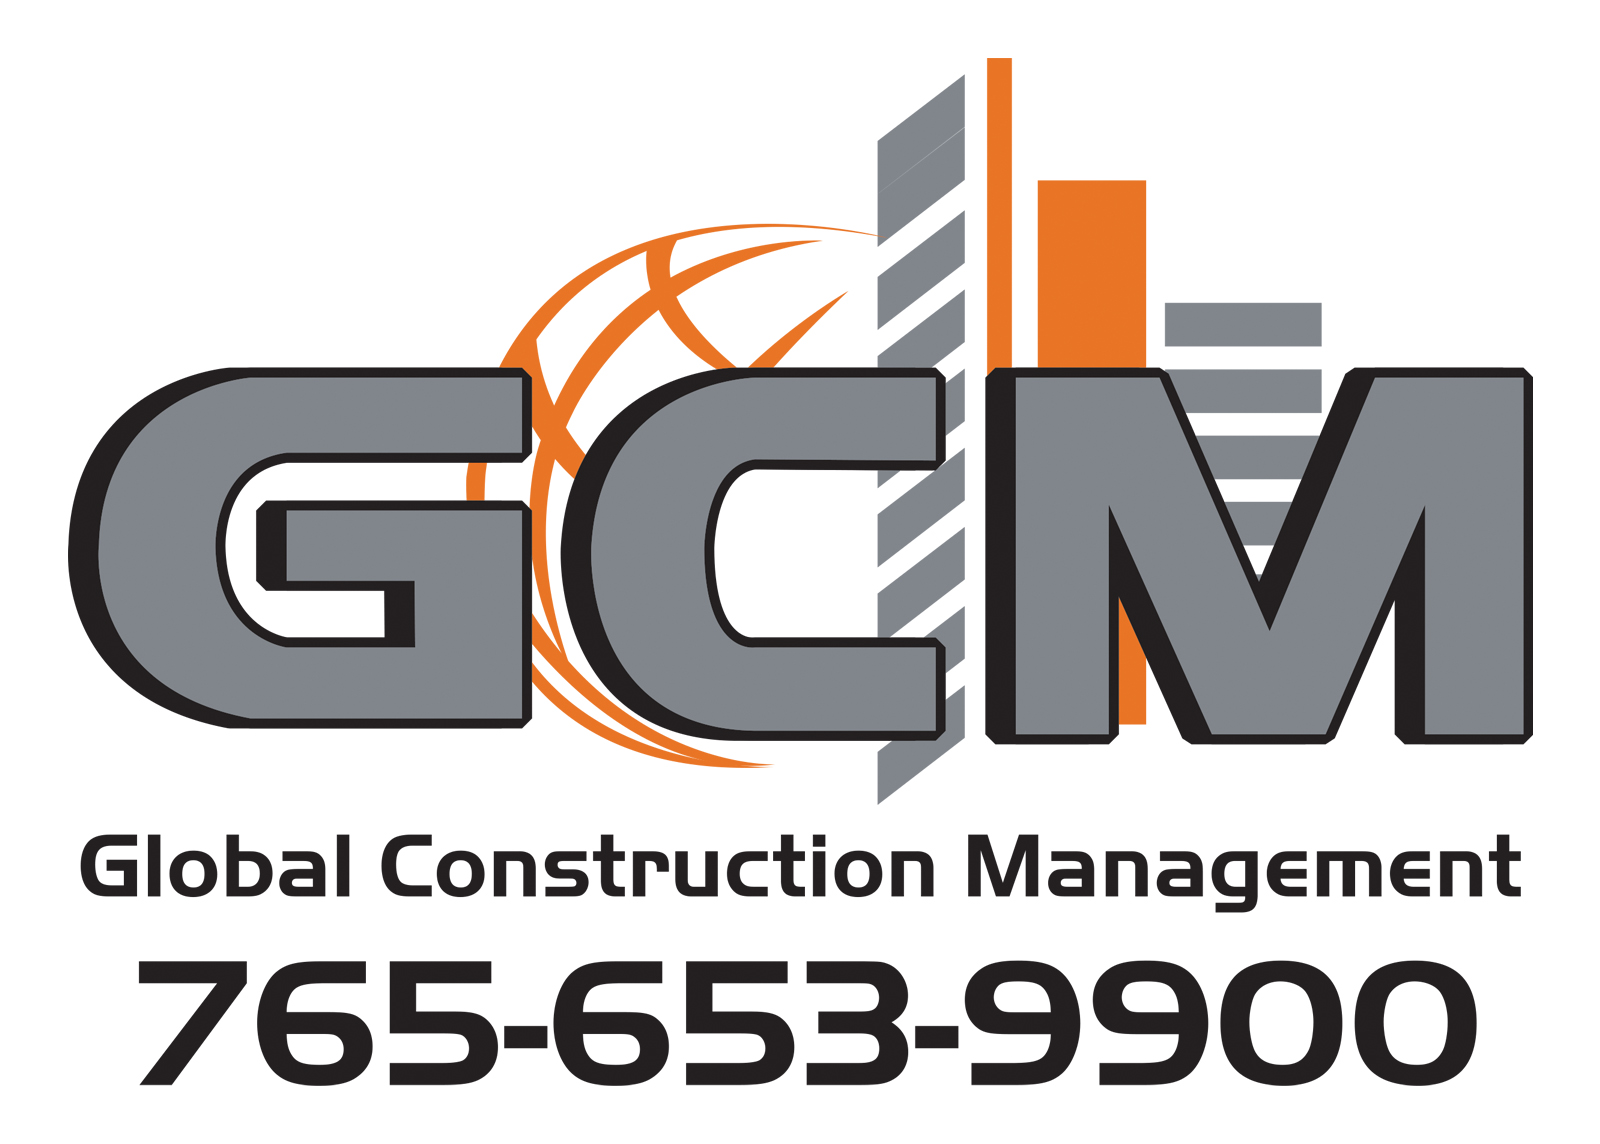 Global Construction Management